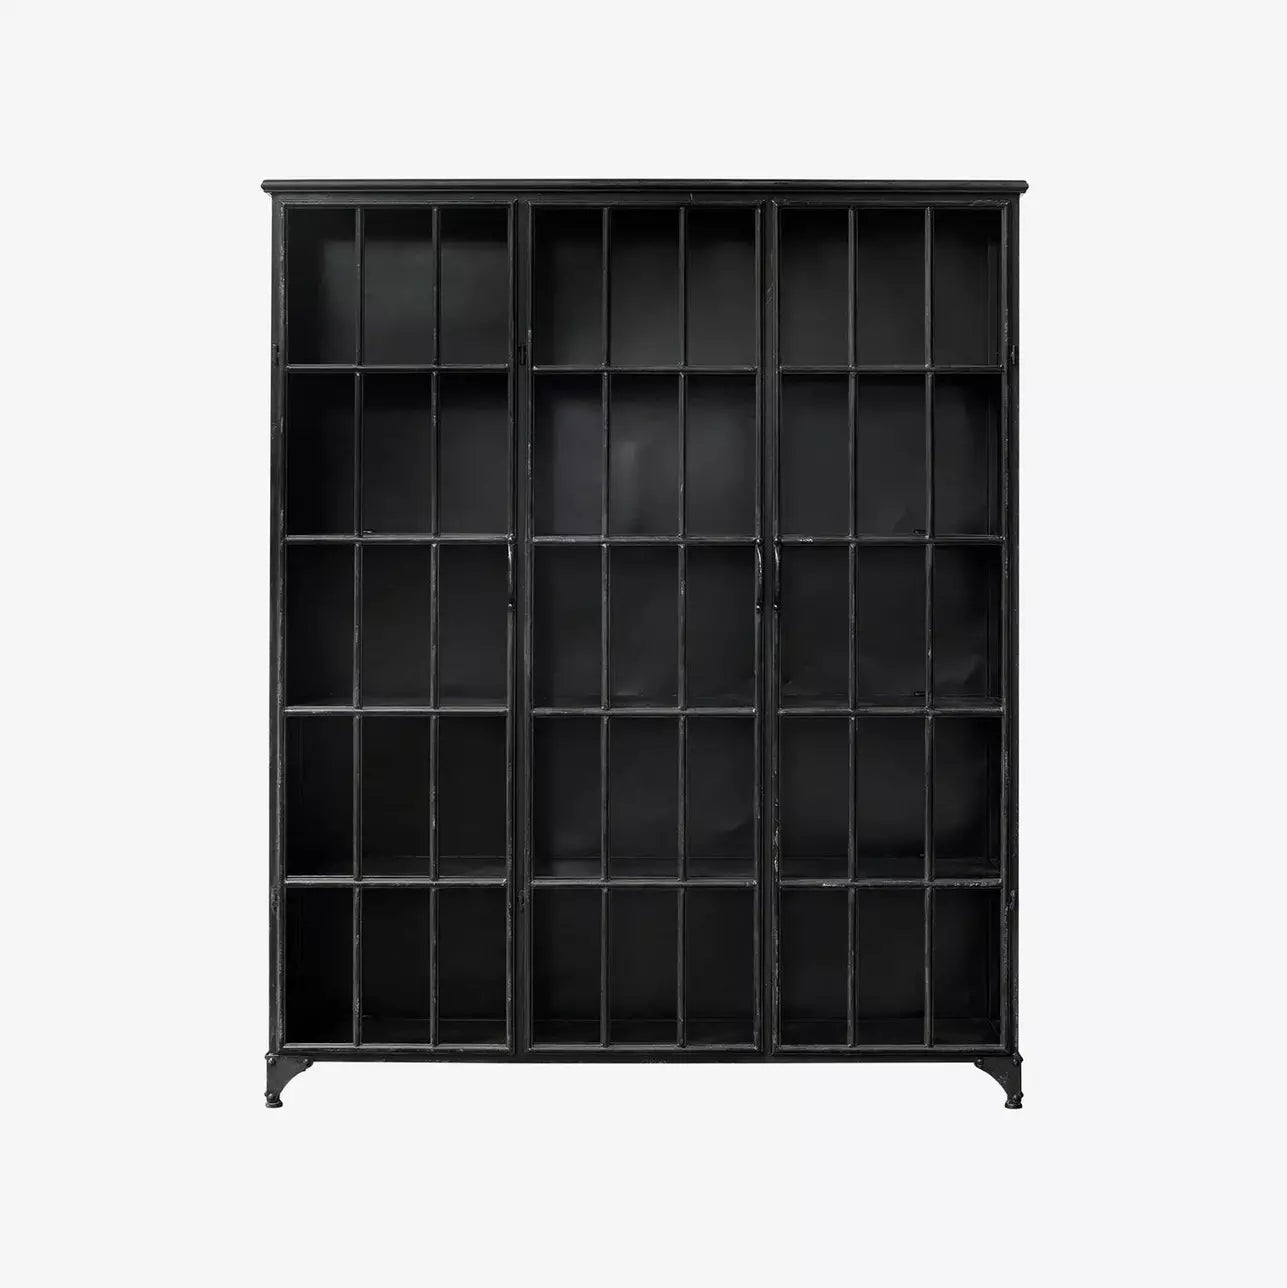 Nordal Downtown Storage Cabinet Black, 3 Doors Iron Glass